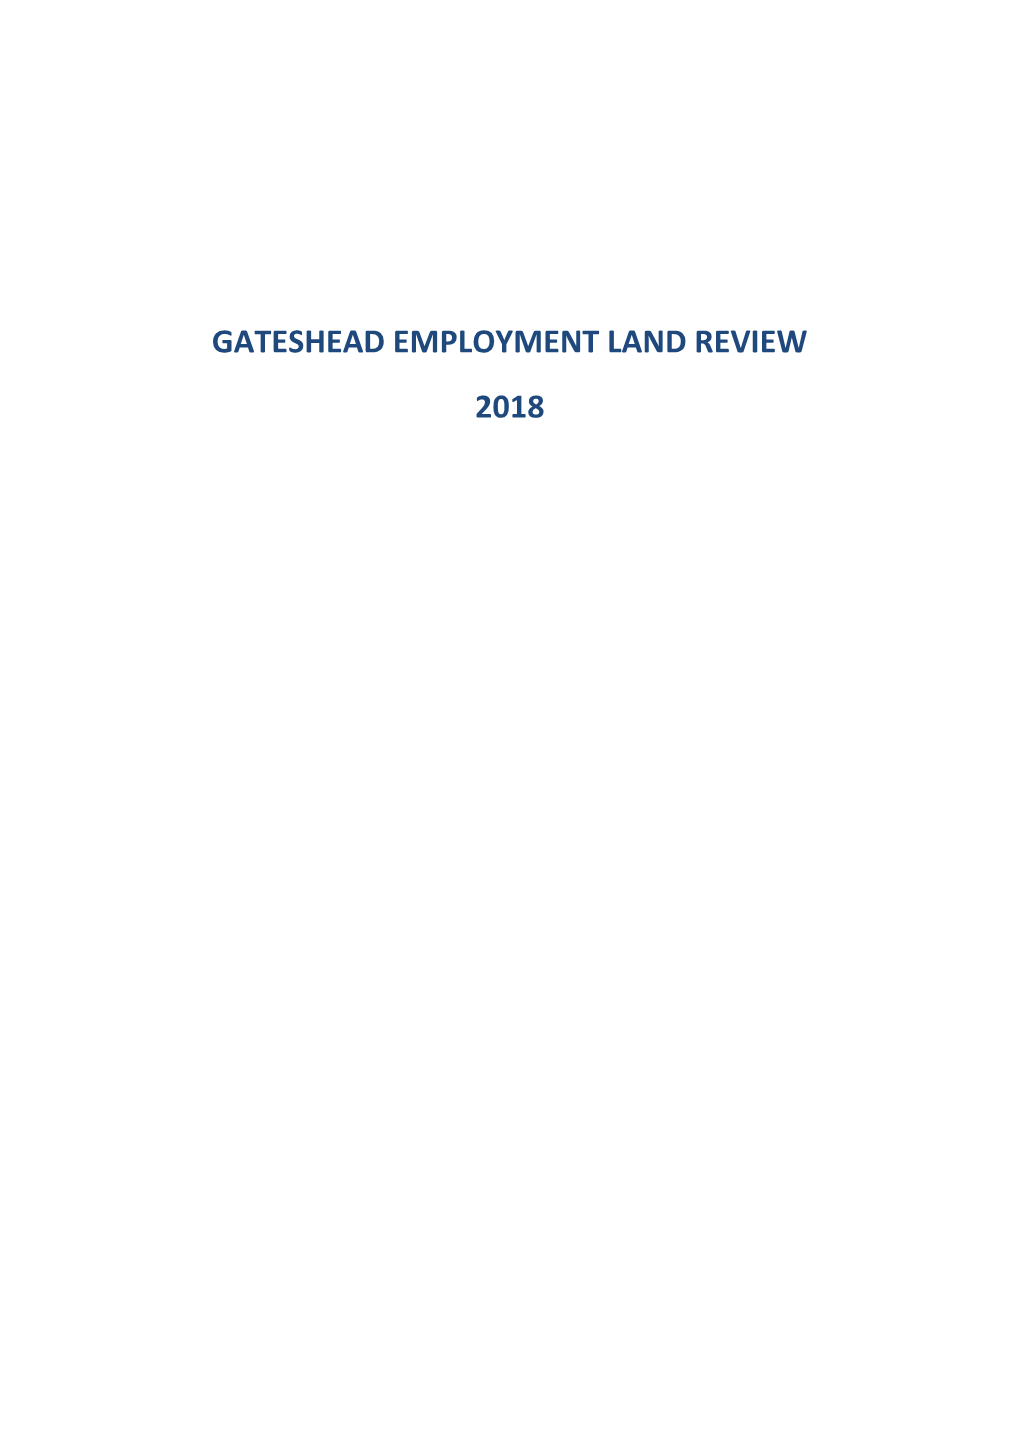 Gateshead Employment Land Review 2018